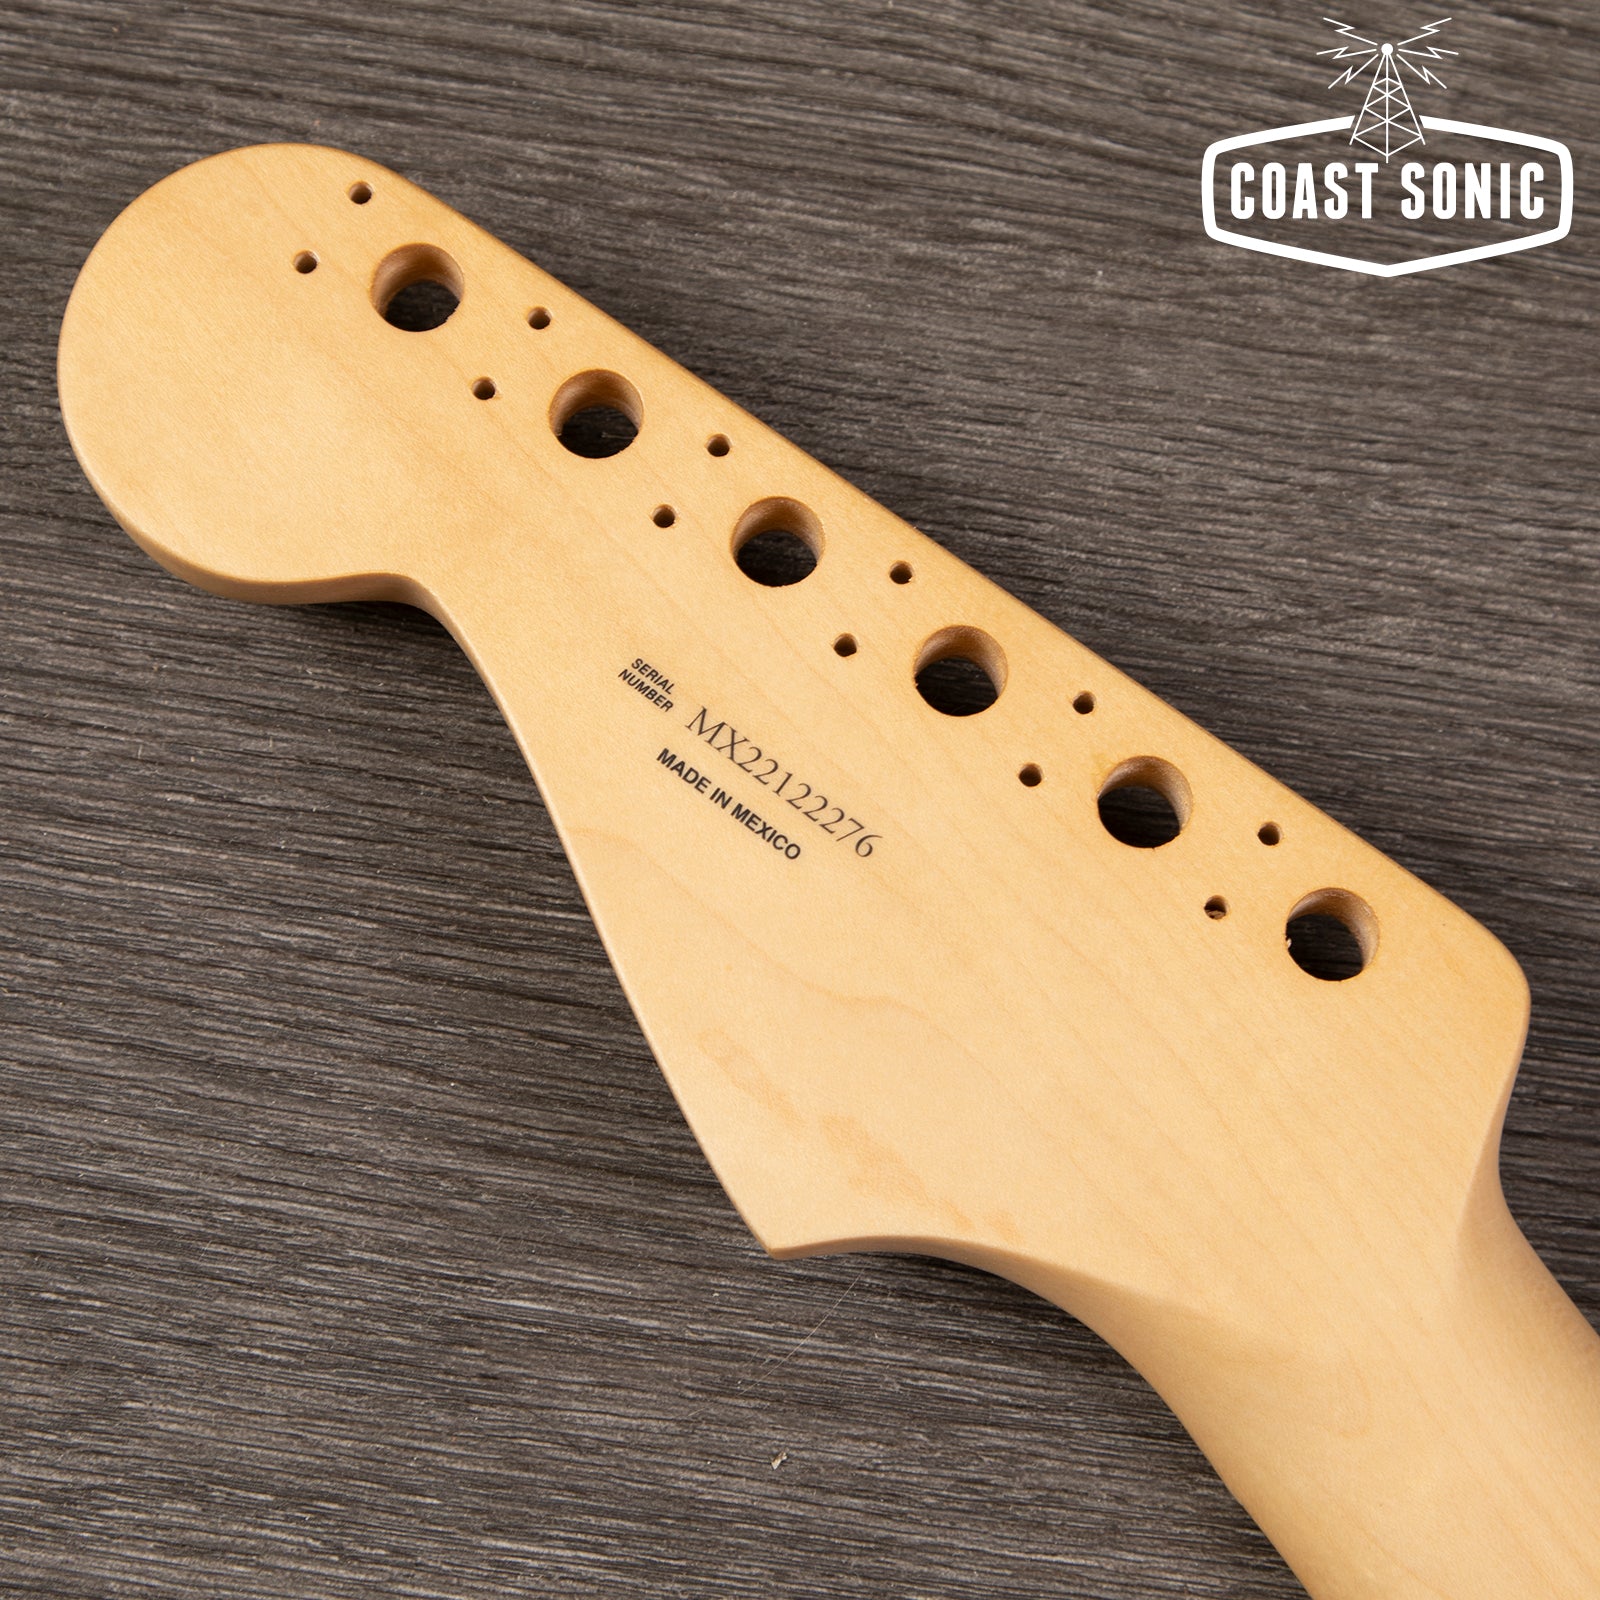 Fender Player Series Stratocaster Neck Maple